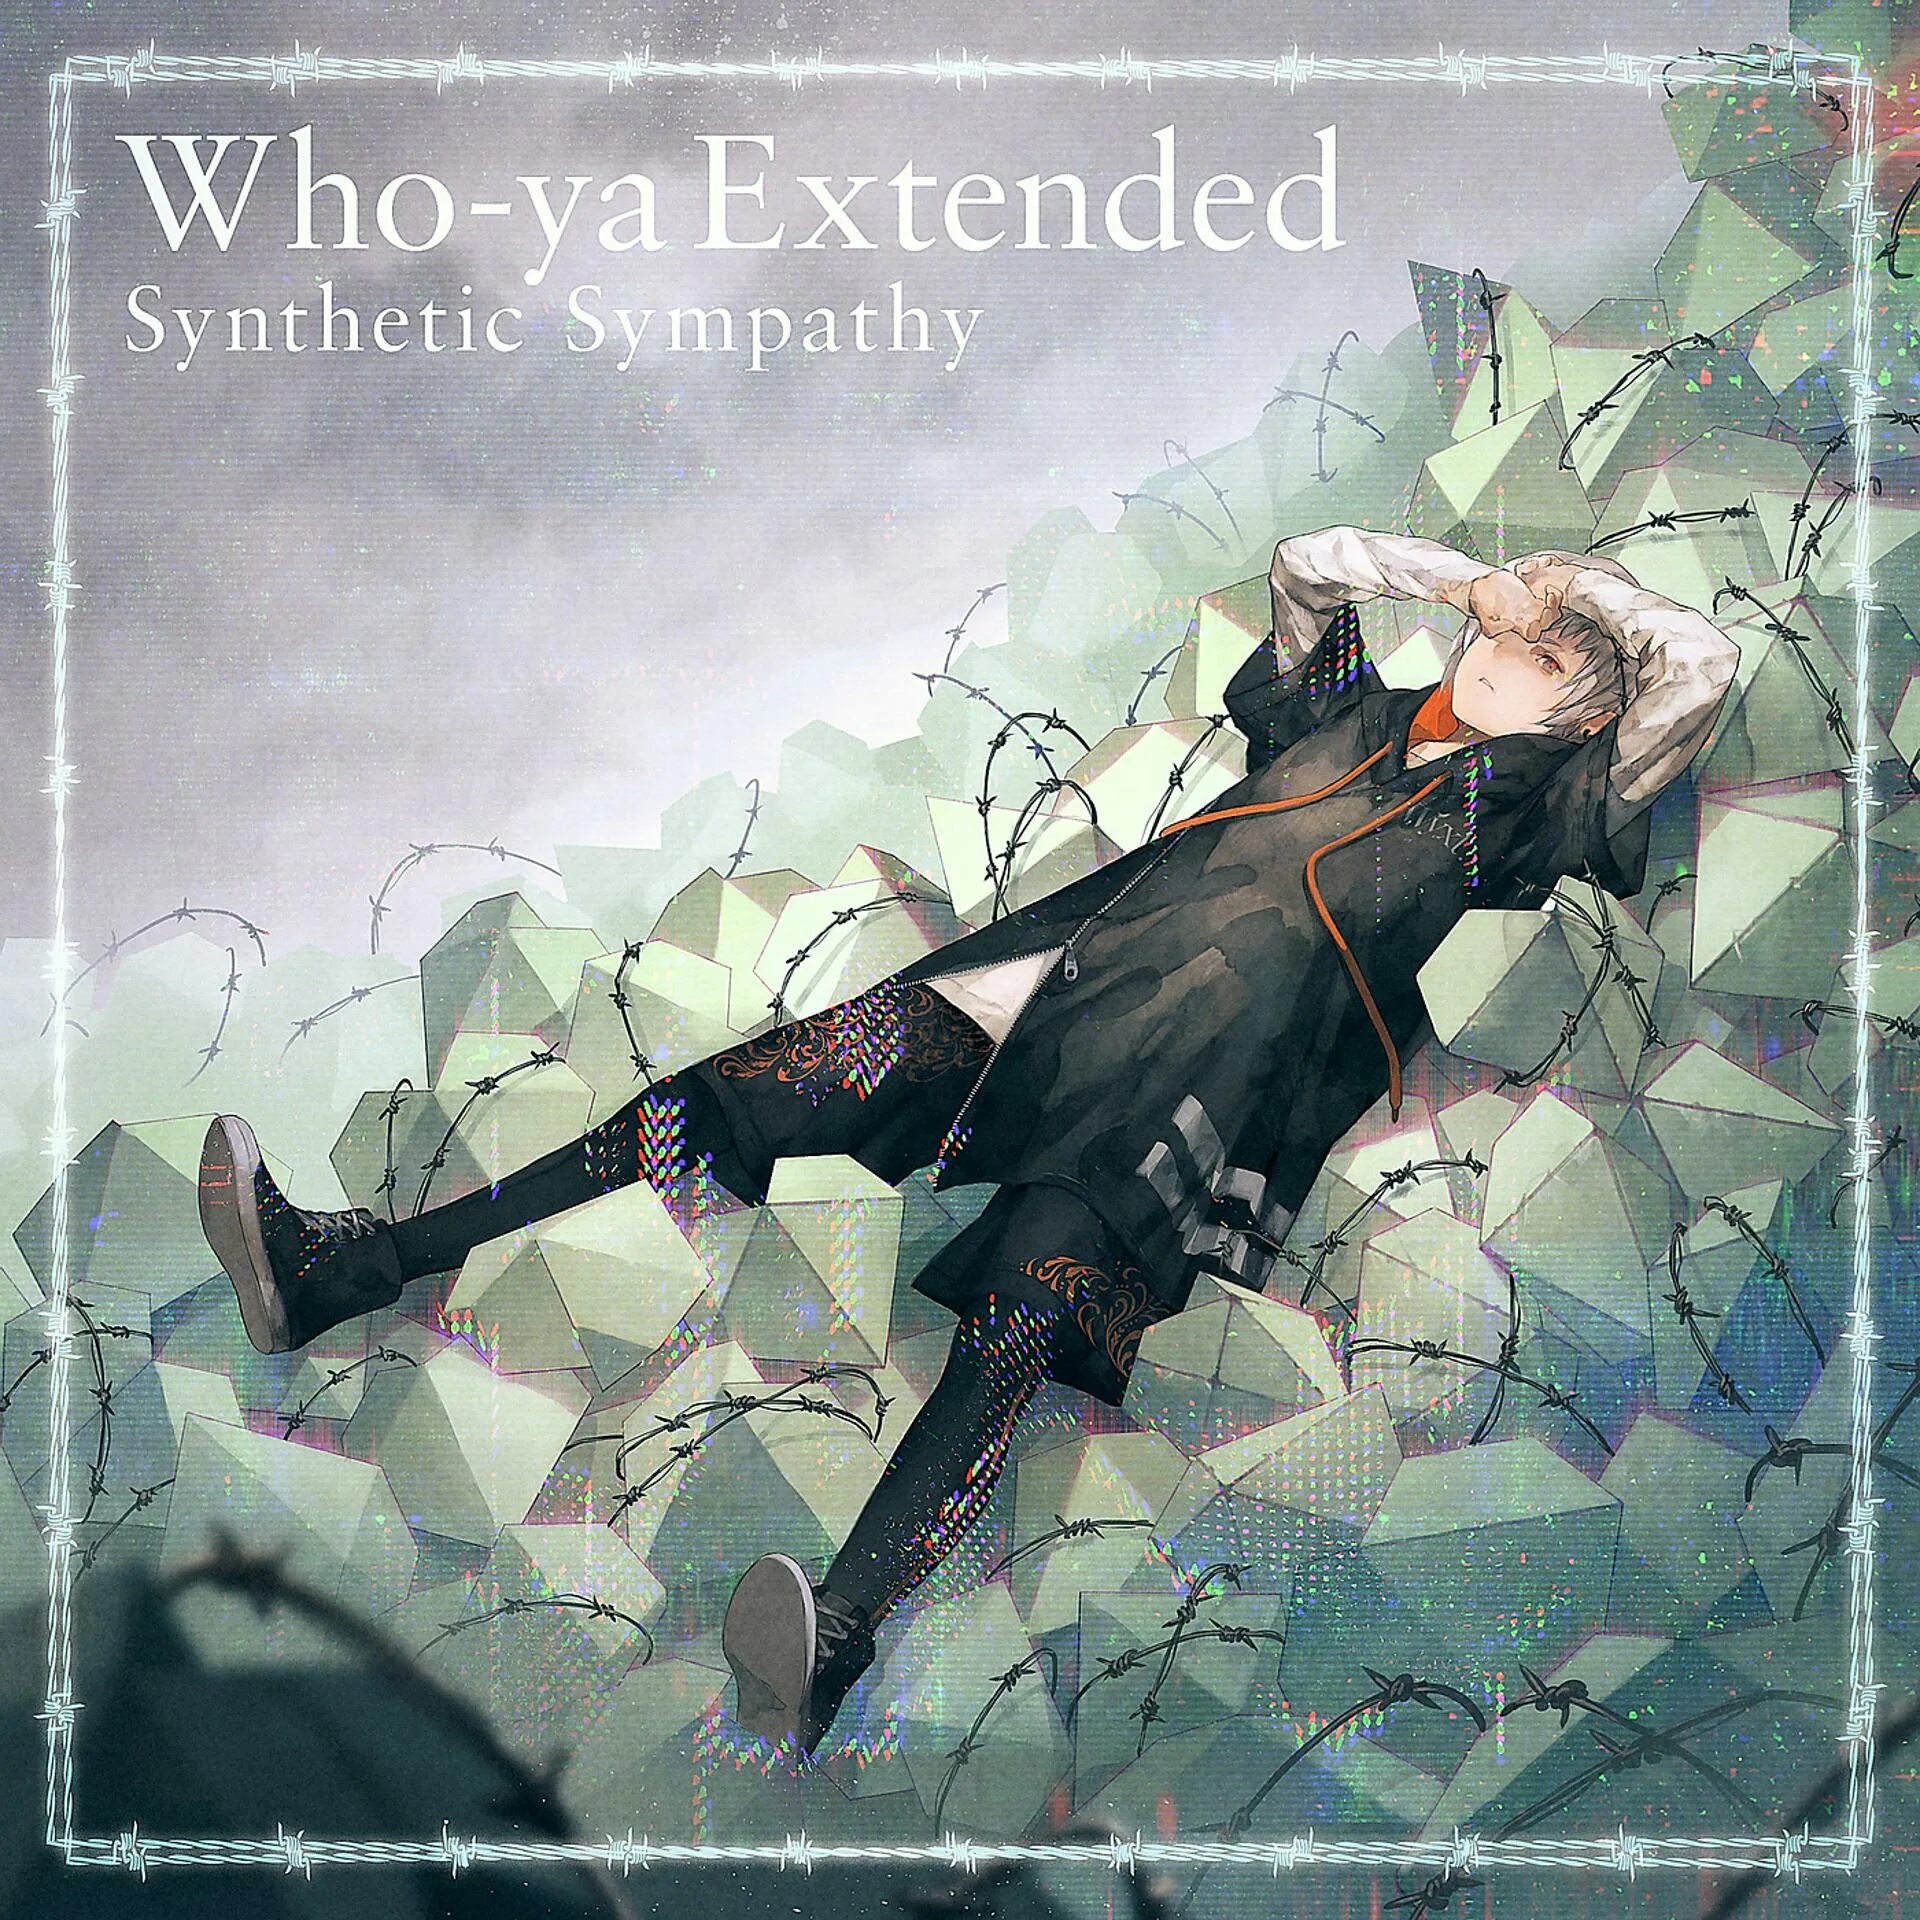 Extended songs. Who-ya Extended. Who-ya Extended группа. Альбом Synthetic. Vivid vice who-ya Extended.